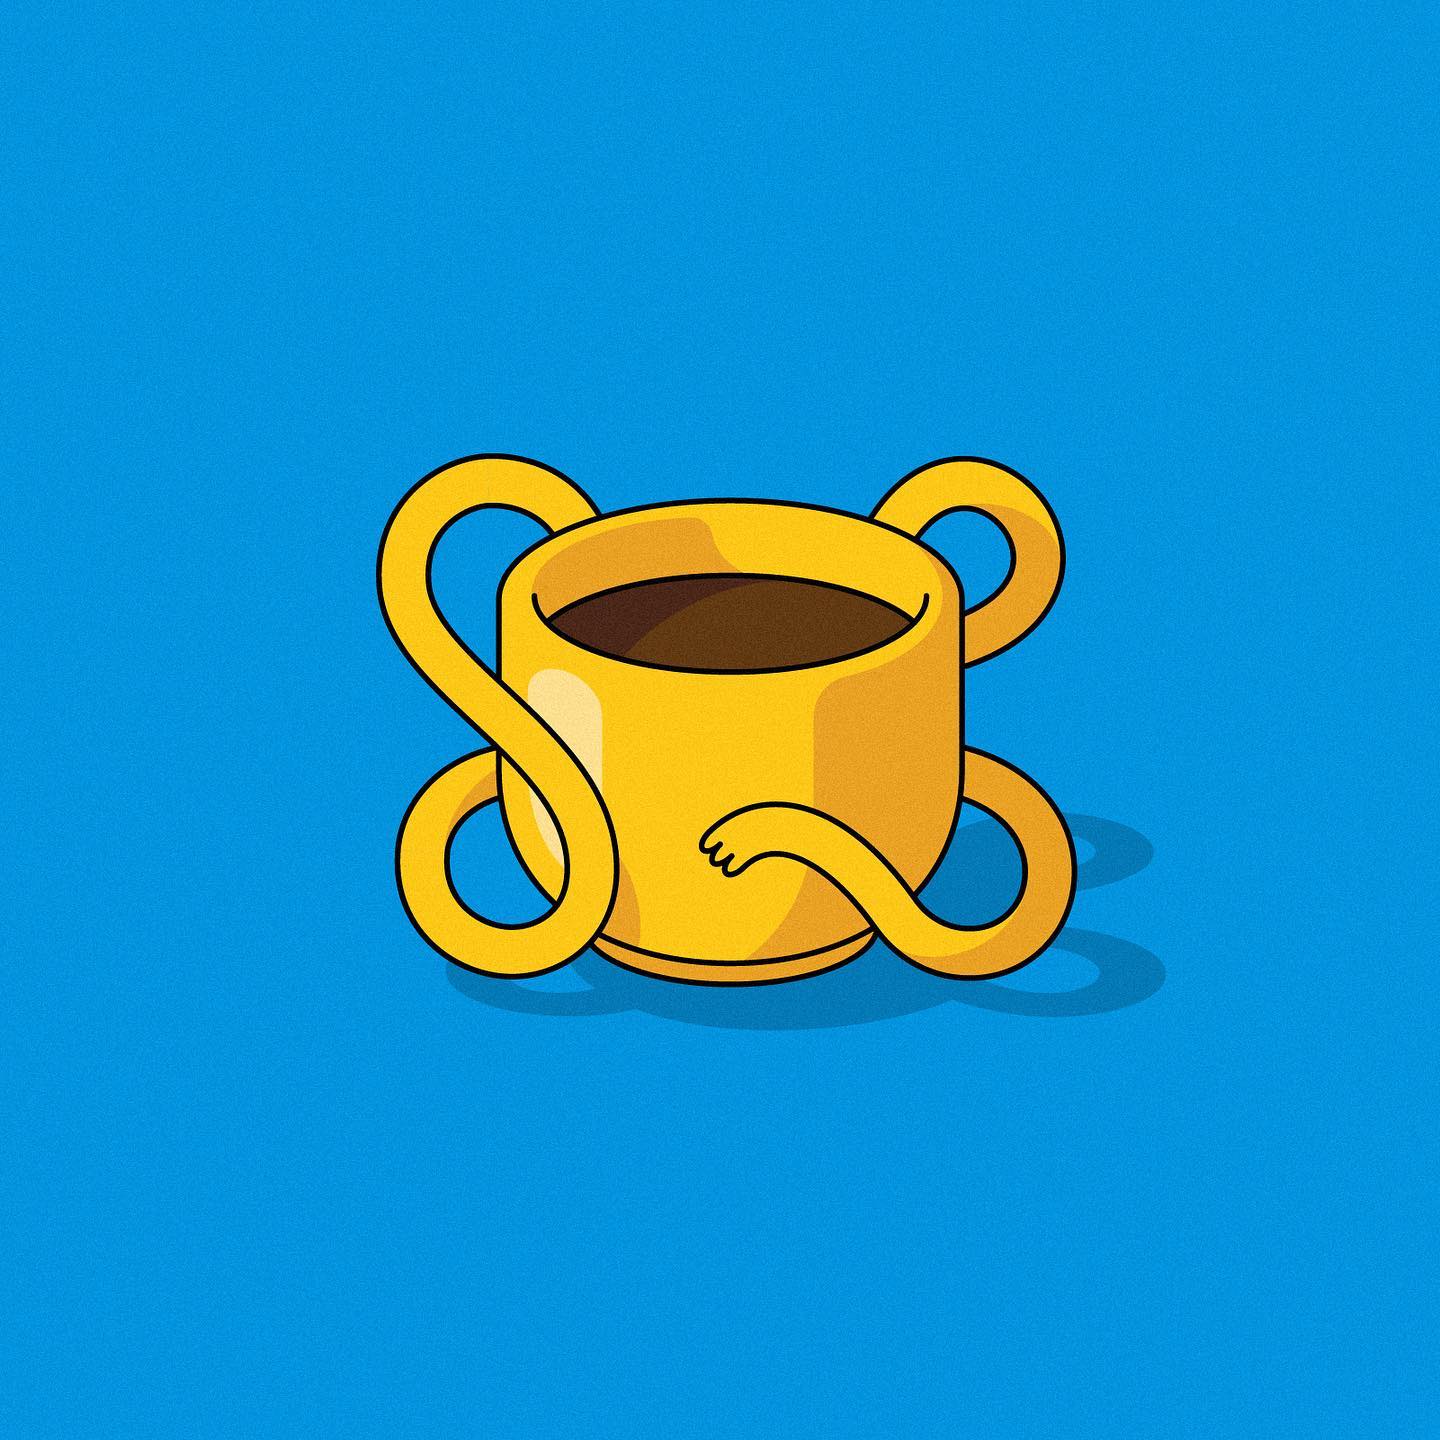 General 1440x1440 Adventure Time cartoon drink cup Jake the Dog minimalism digital art simple background